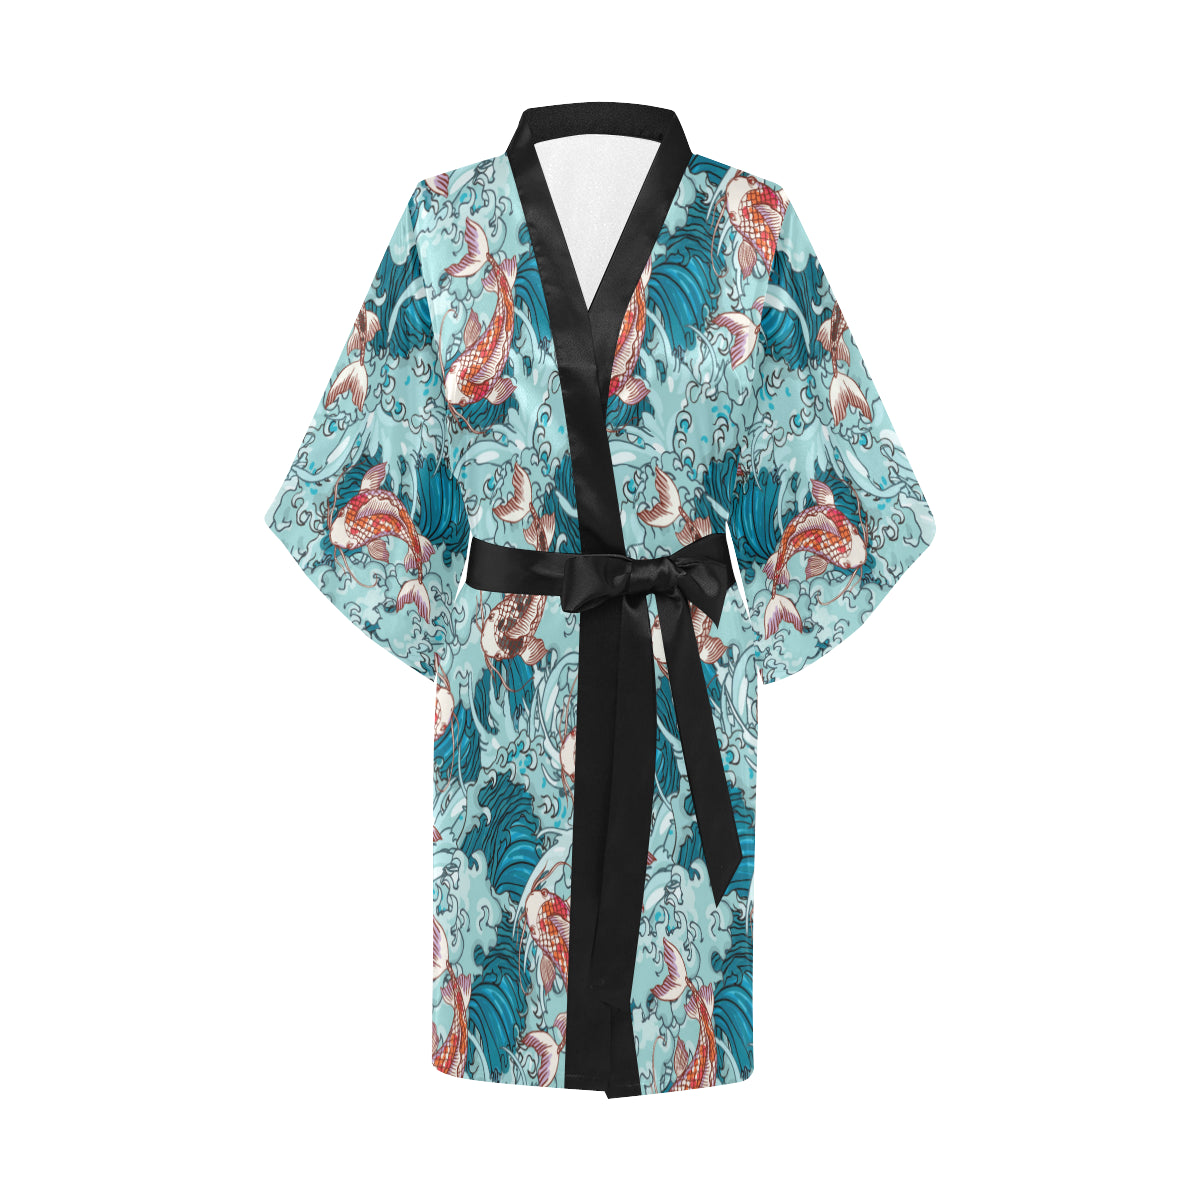 KOI Fish Pattern Print Design 05 Women's Short Kimono